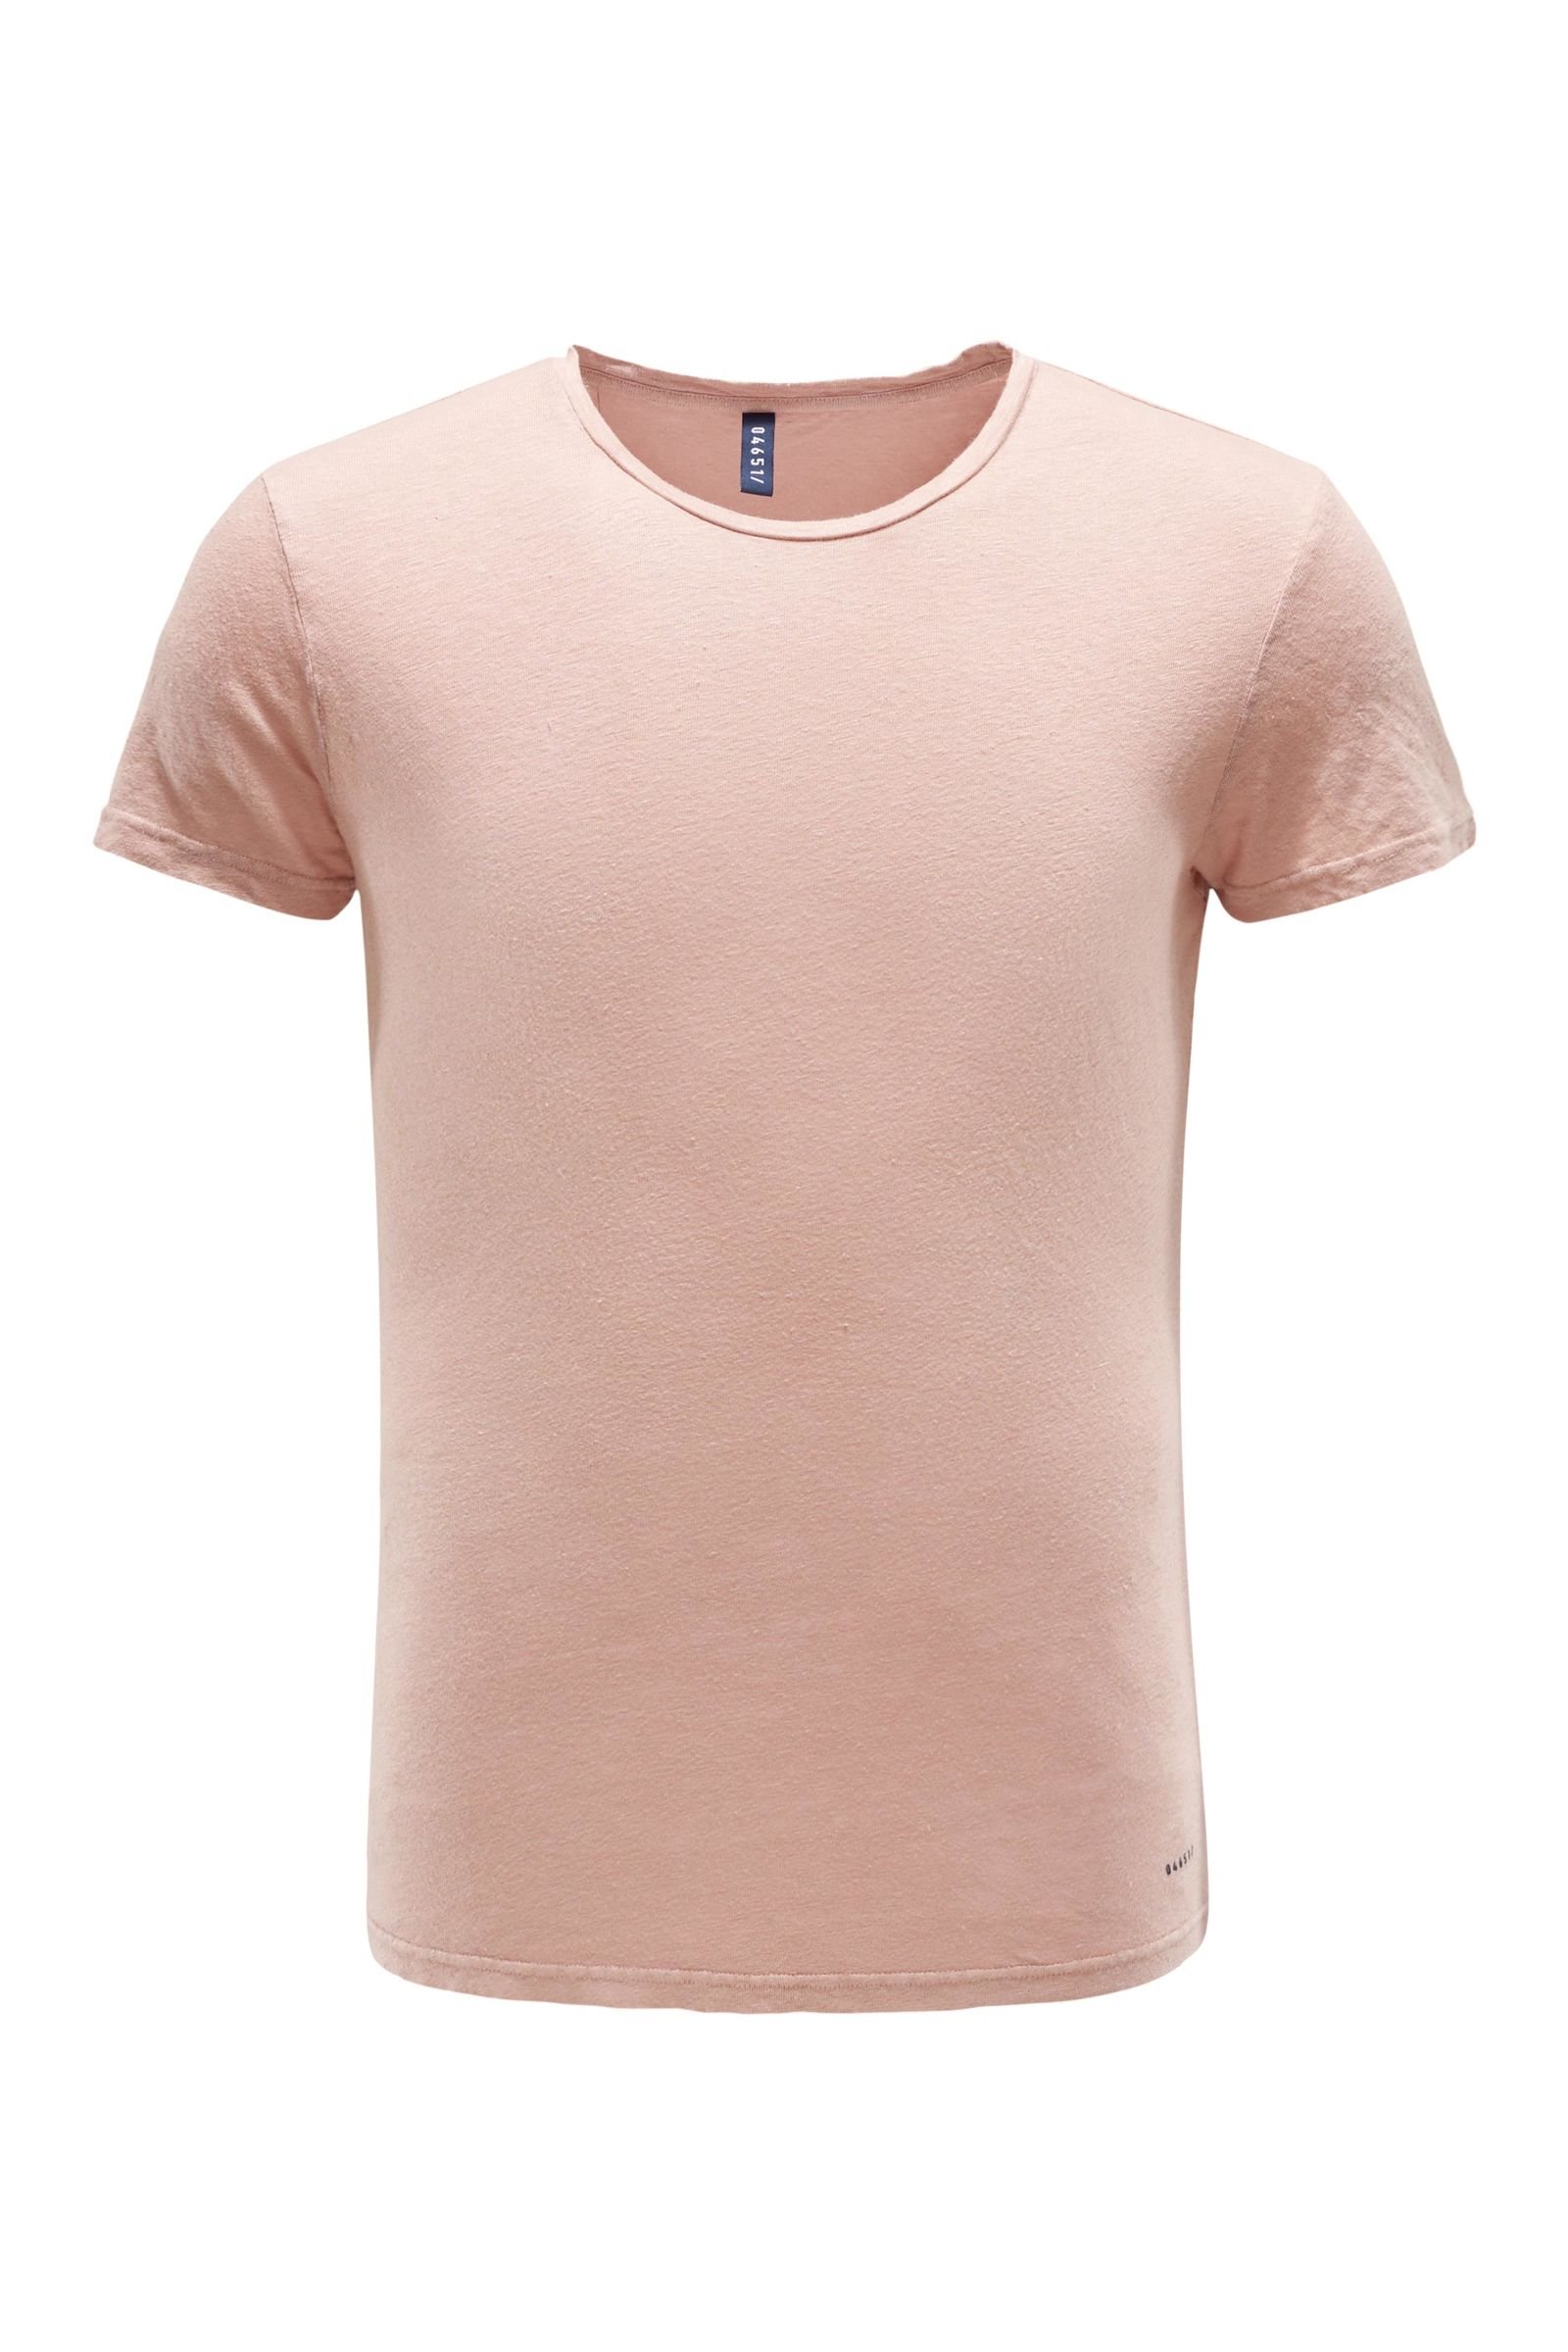 Linen crew neck T-shirt antique pink